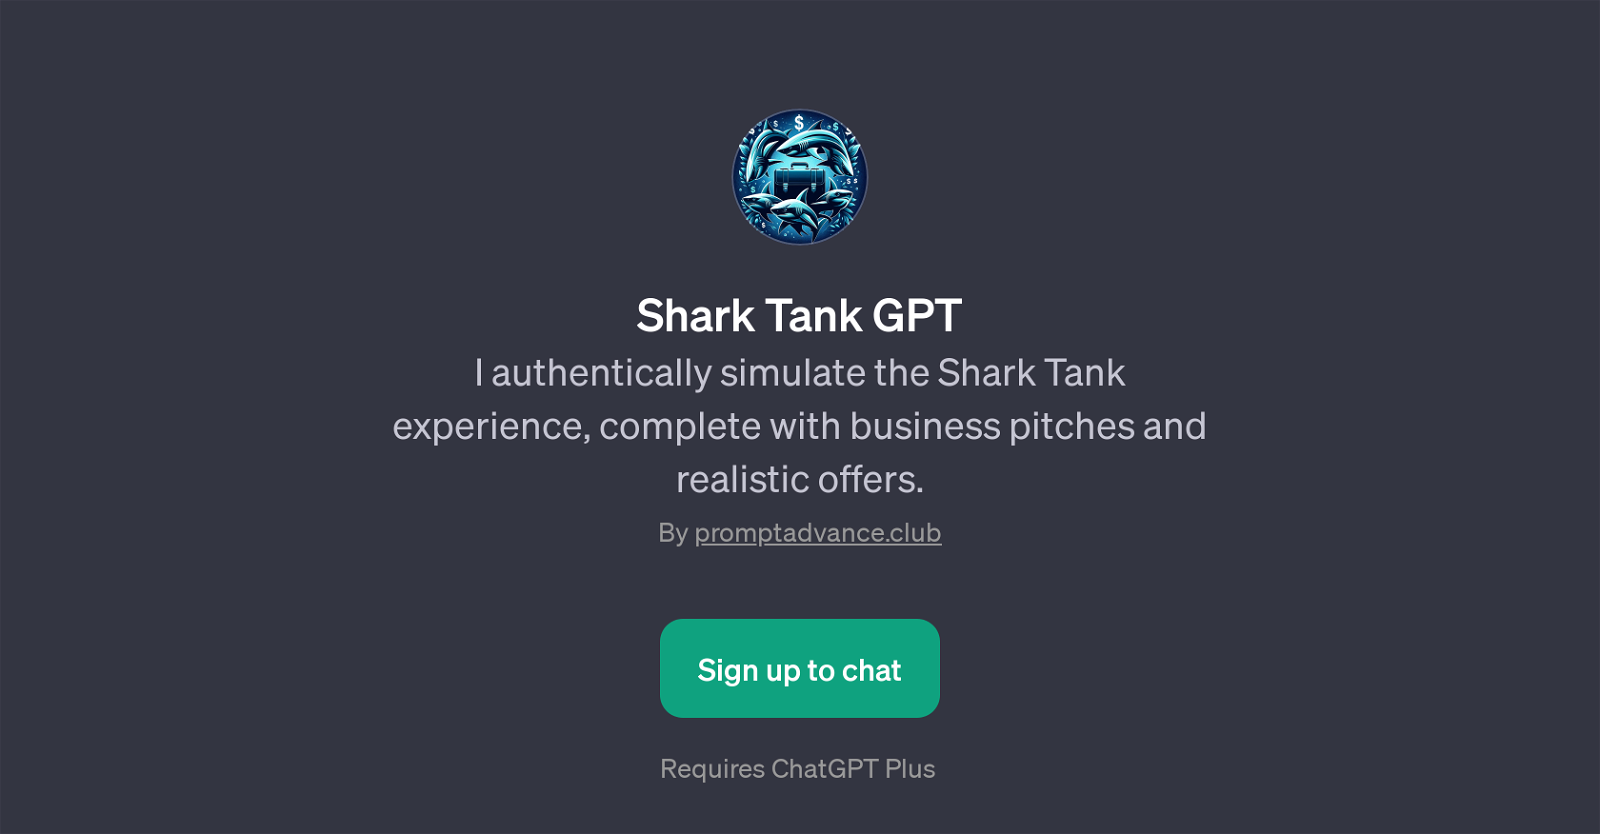 Shark Tank GPT website